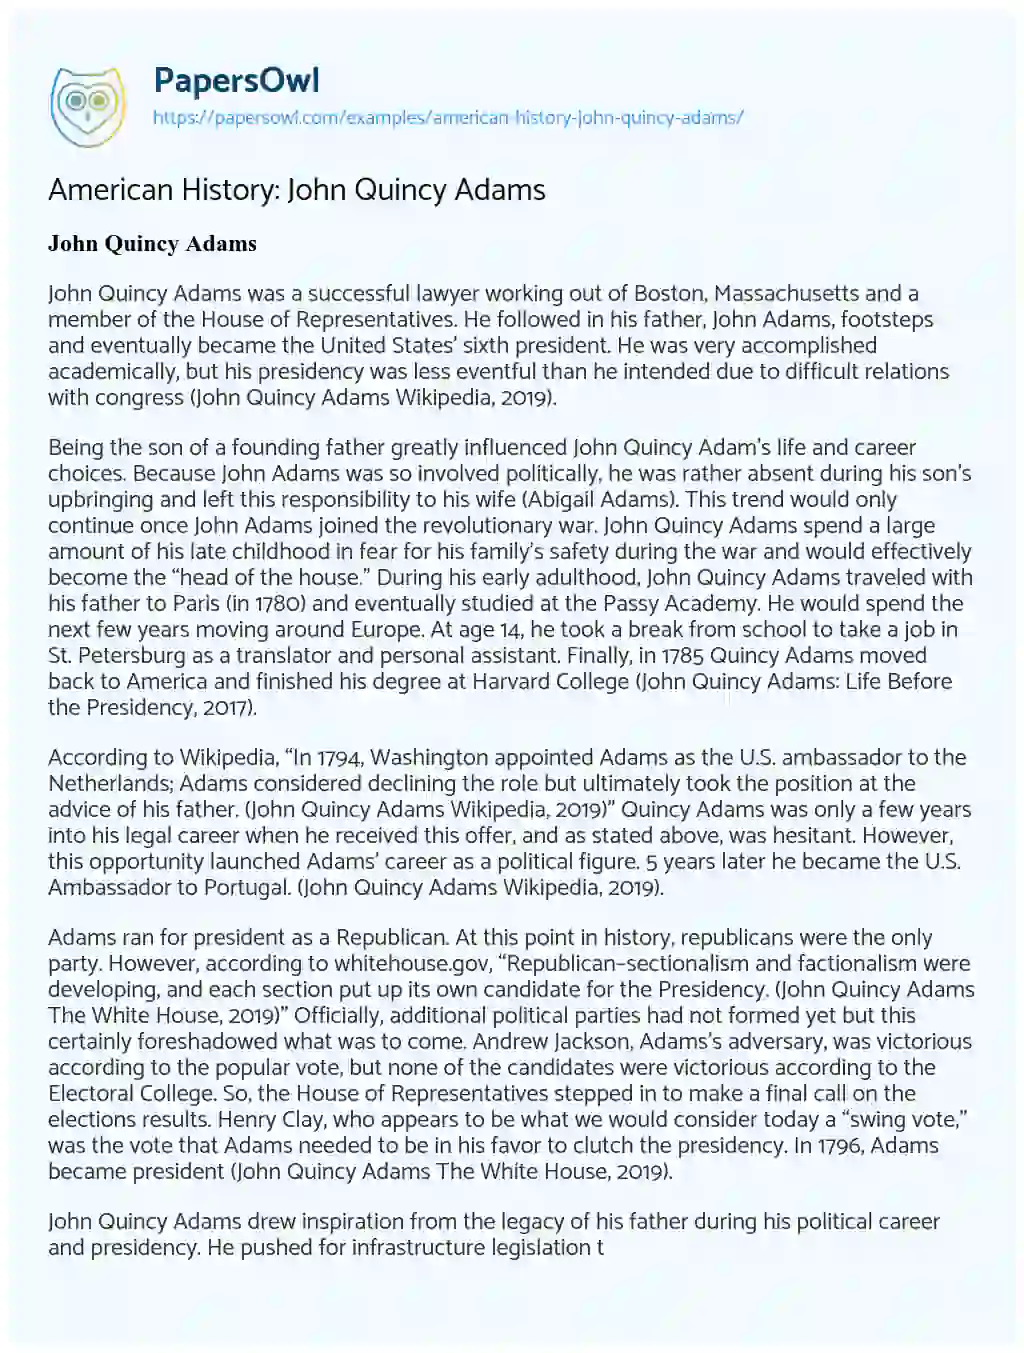 Essay on American History: John Quincy Adams